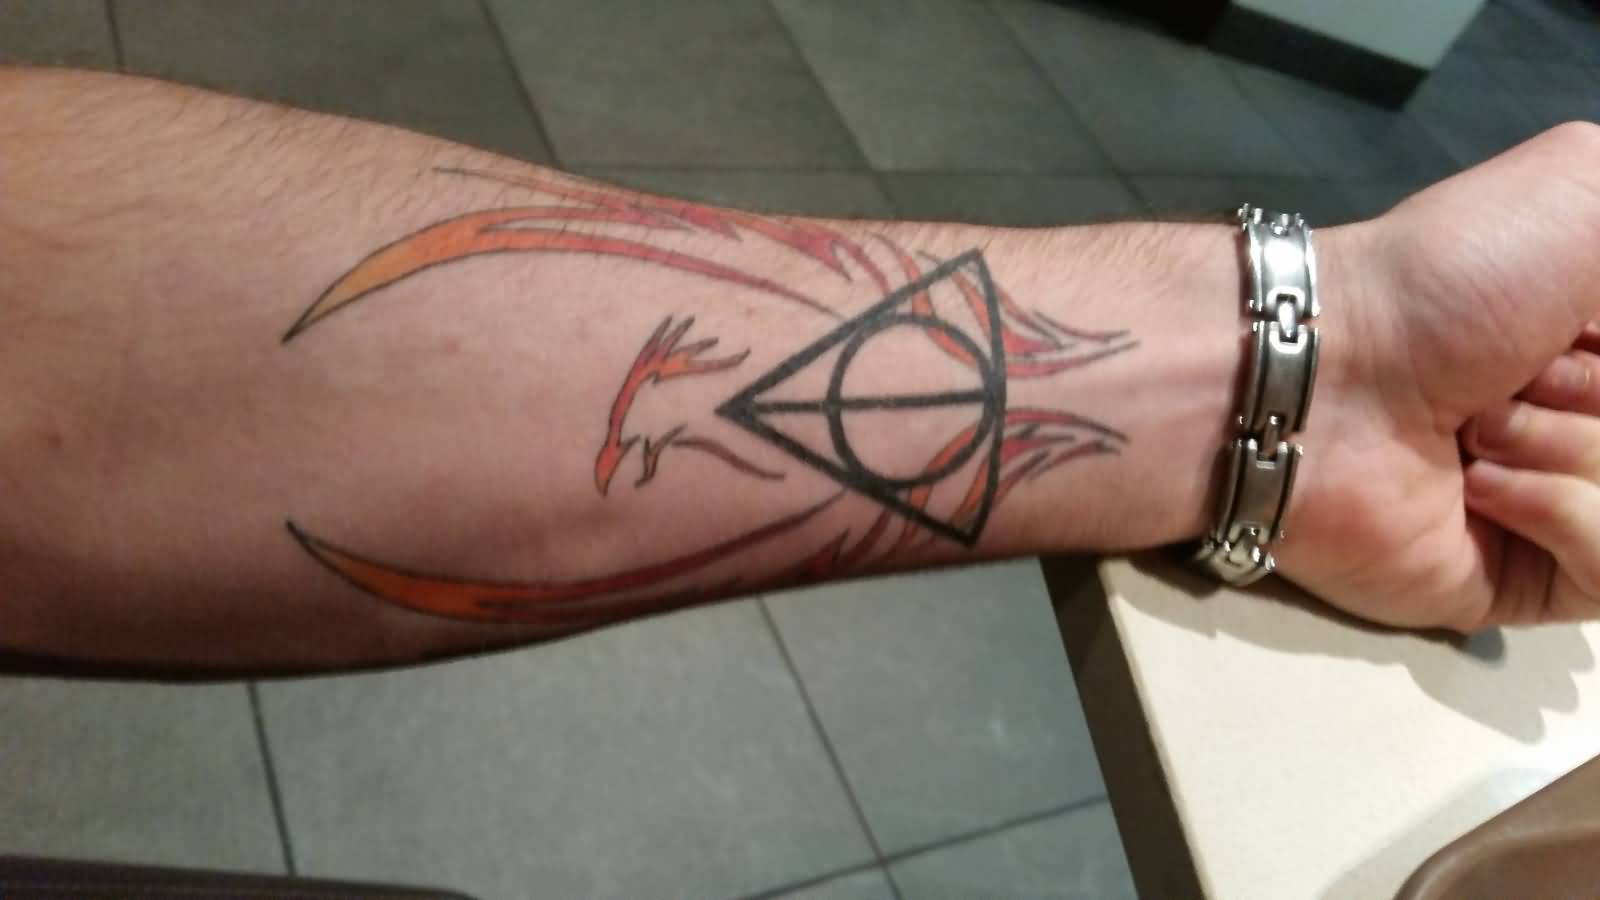 Wonderful Tribal Phoenix Hallows Tattoo On Forearm